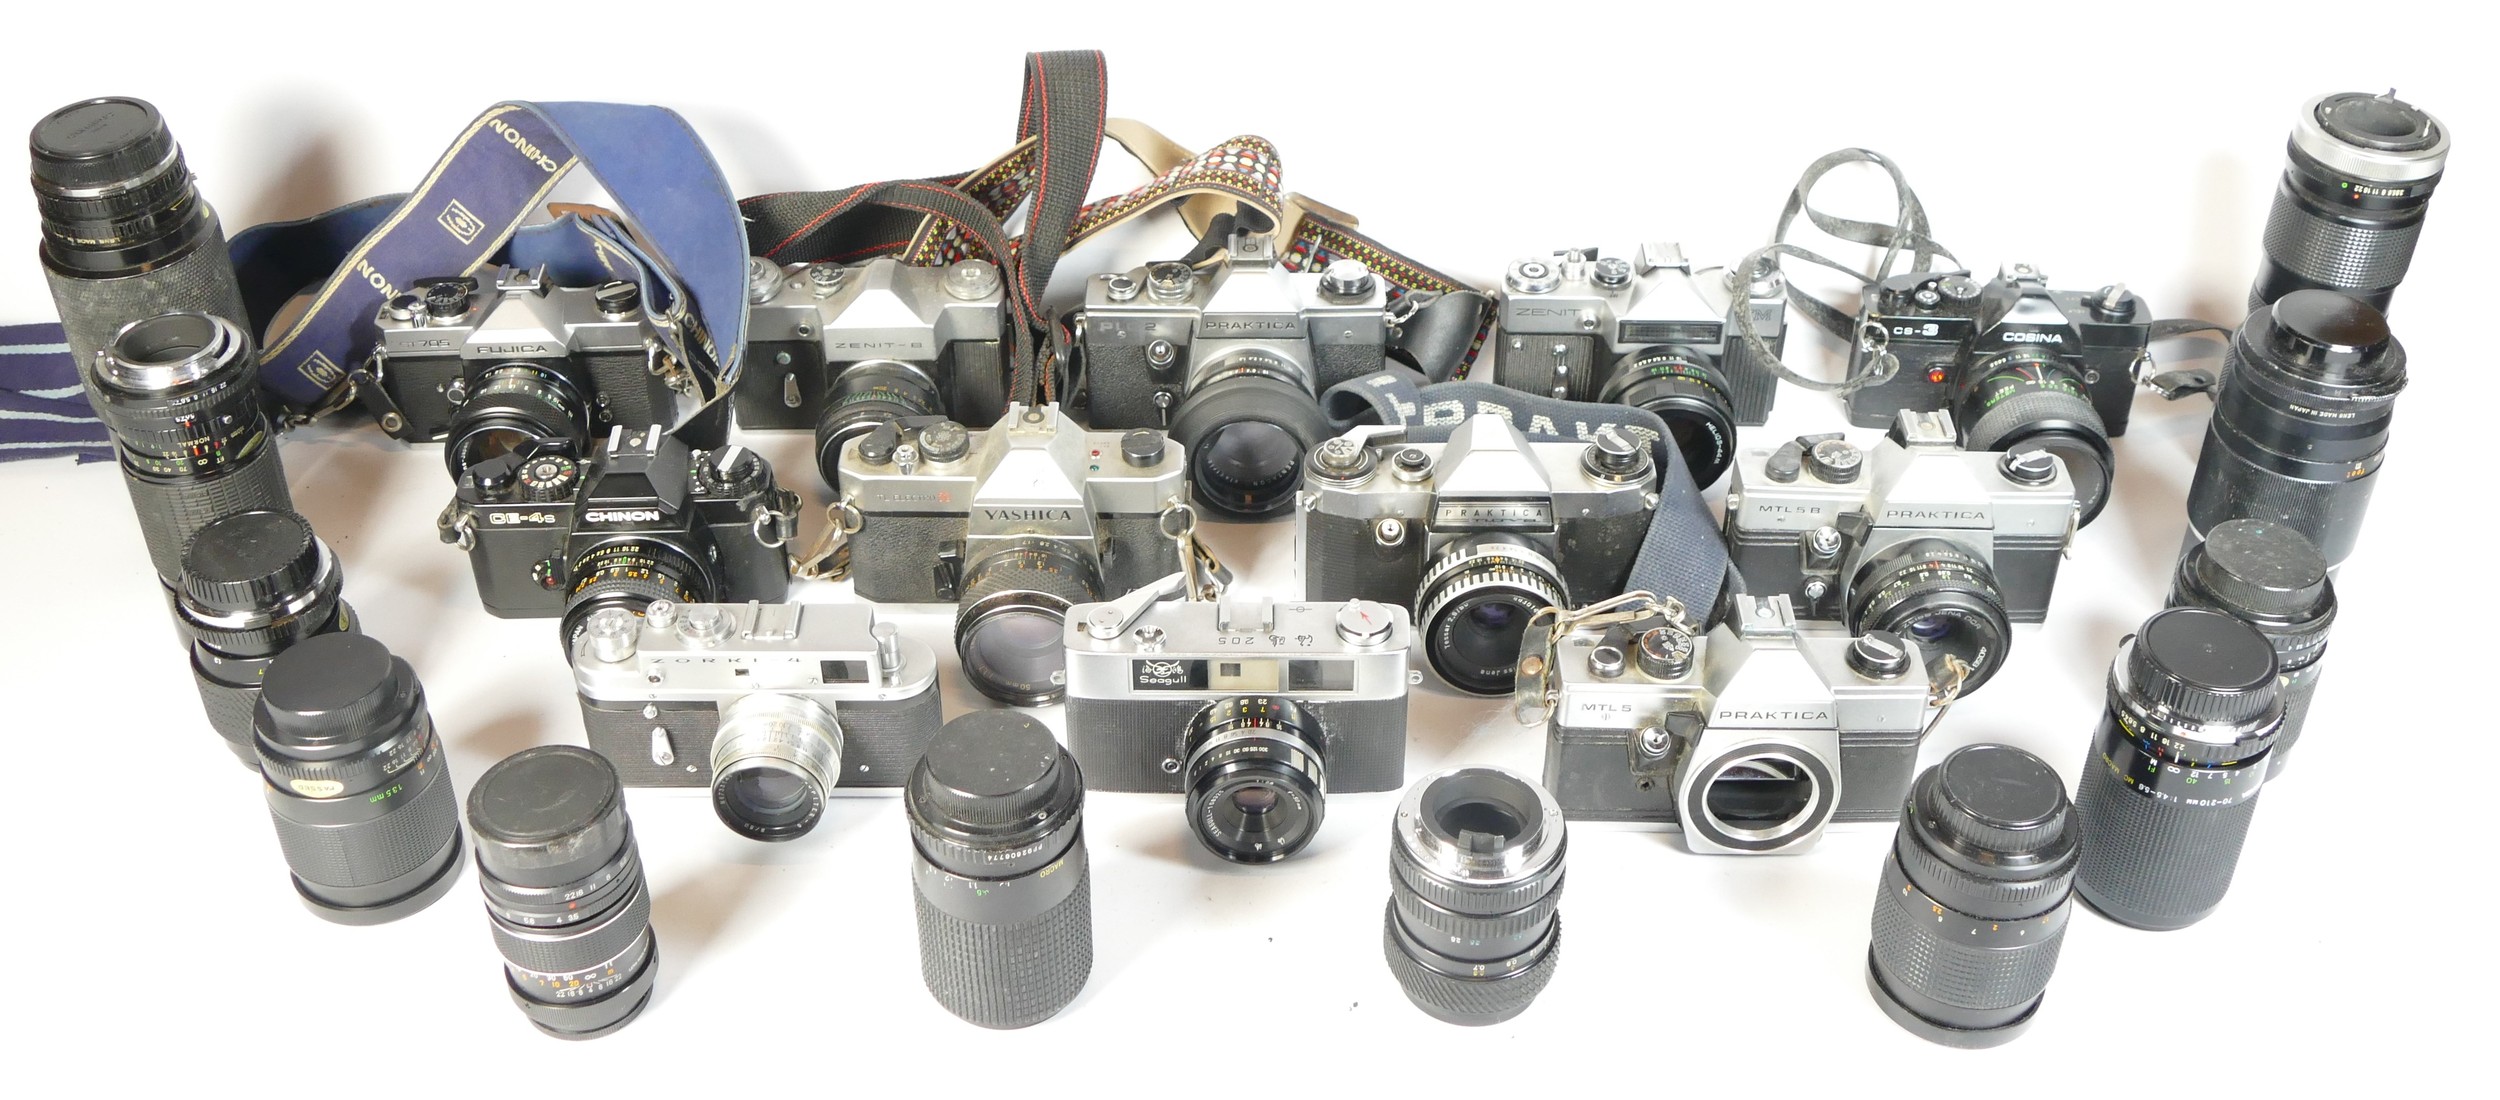 Twelve SLR vintage film cameras to include a Zenit B, a Praktica MTL5B, a Zenit EM and a Yashica